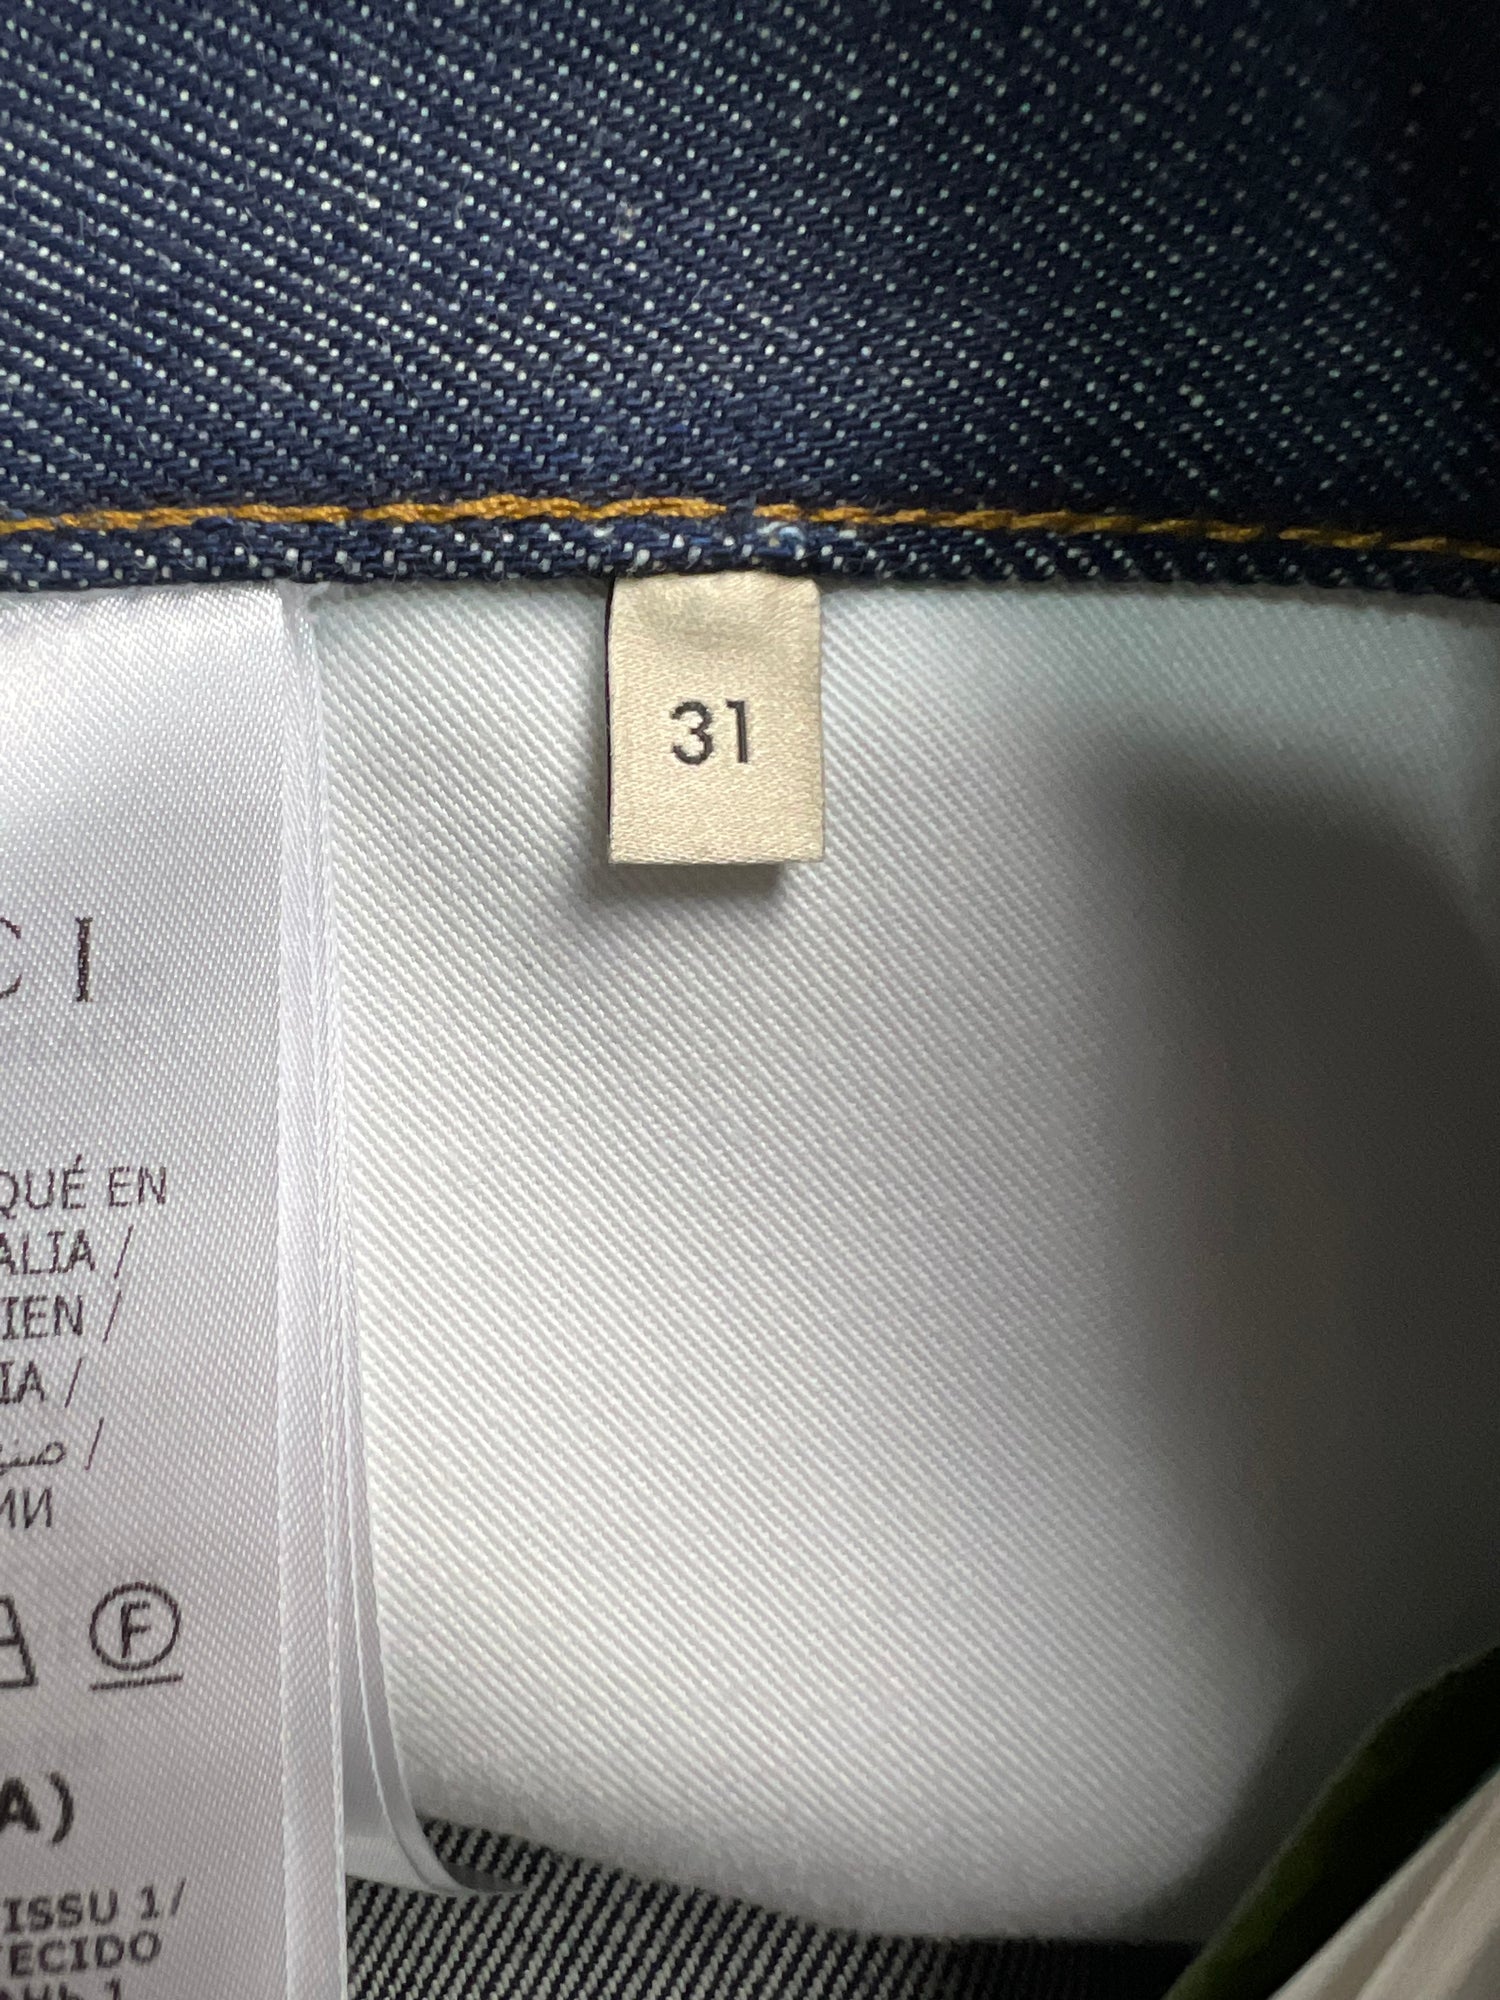 Louis Vuitton Distressed Baggy Monogram Jeans